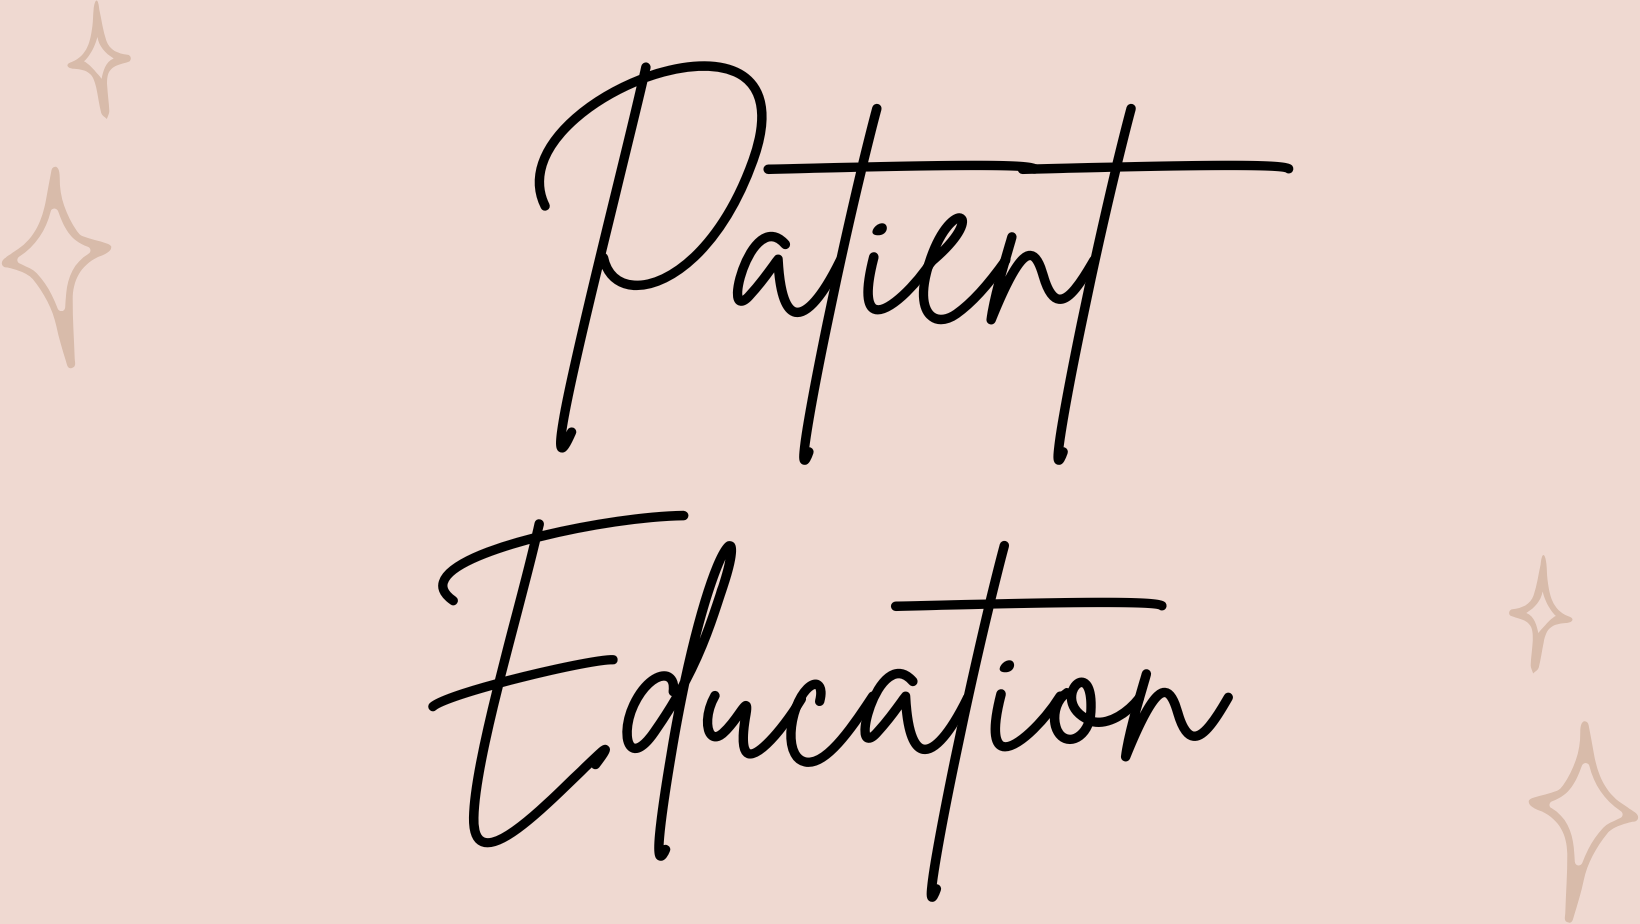 Patient Education Series - A Nurse Named Courtney